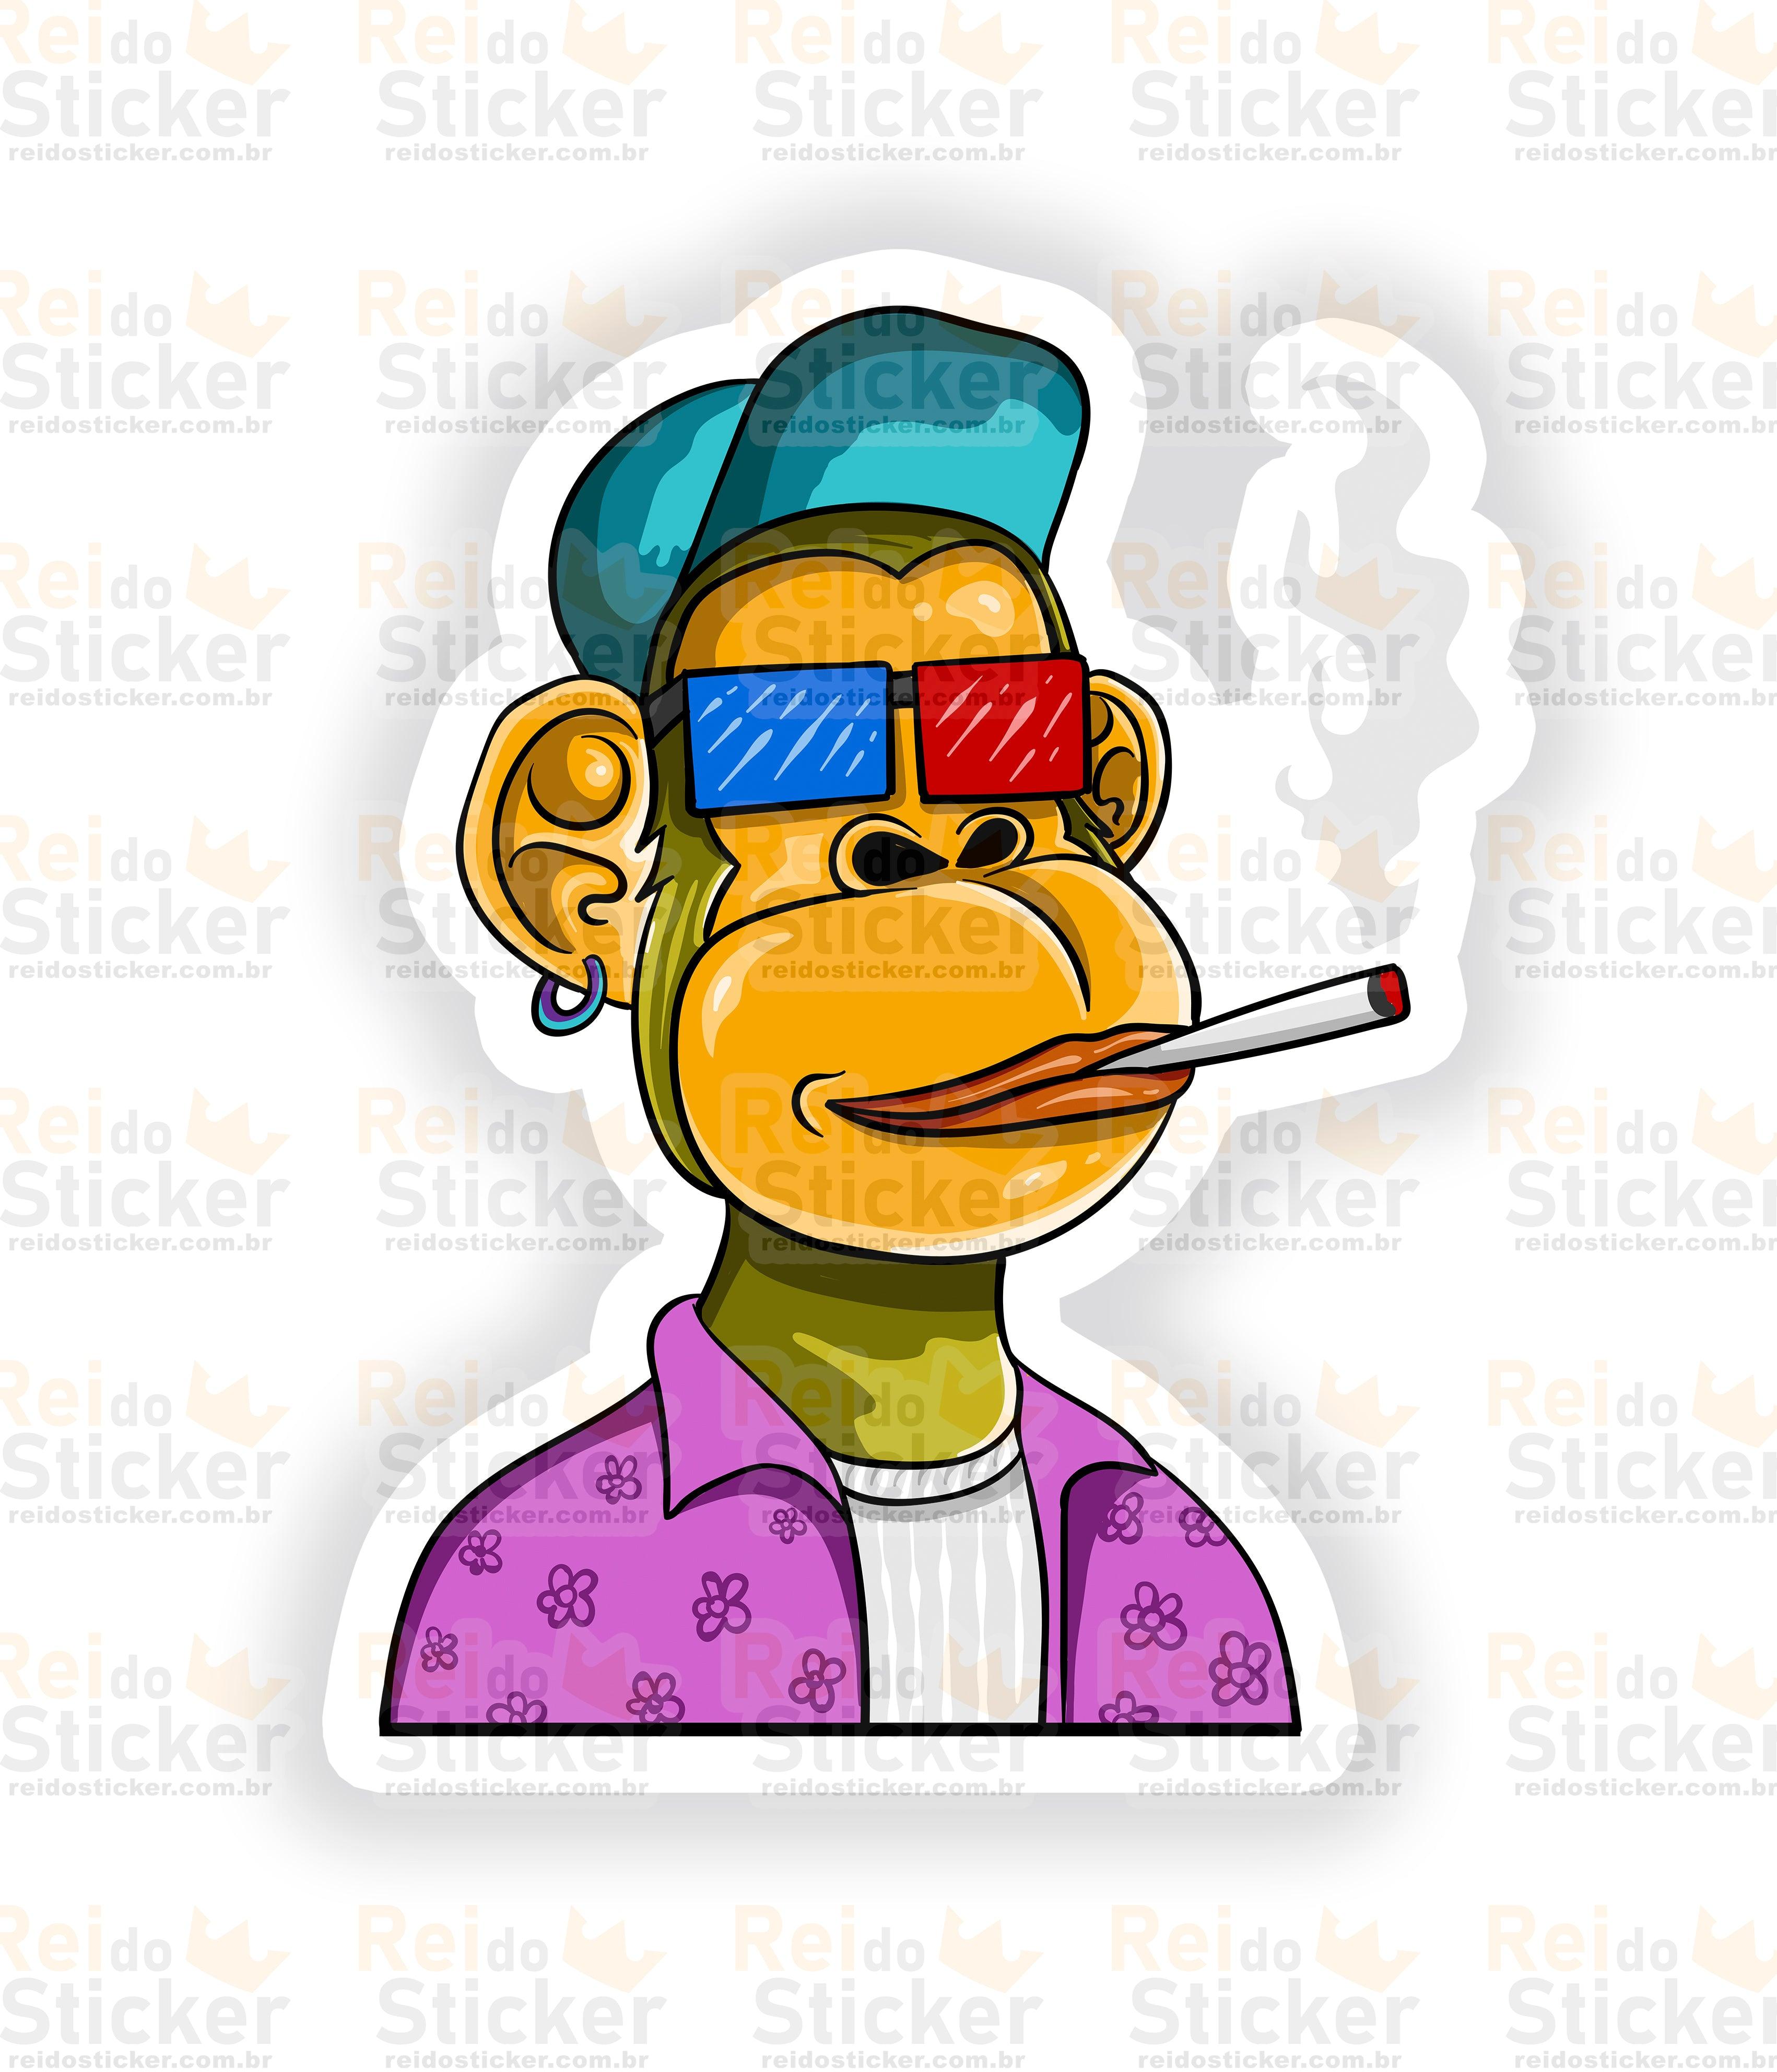 Macaco Fumante - Rei do Sticker